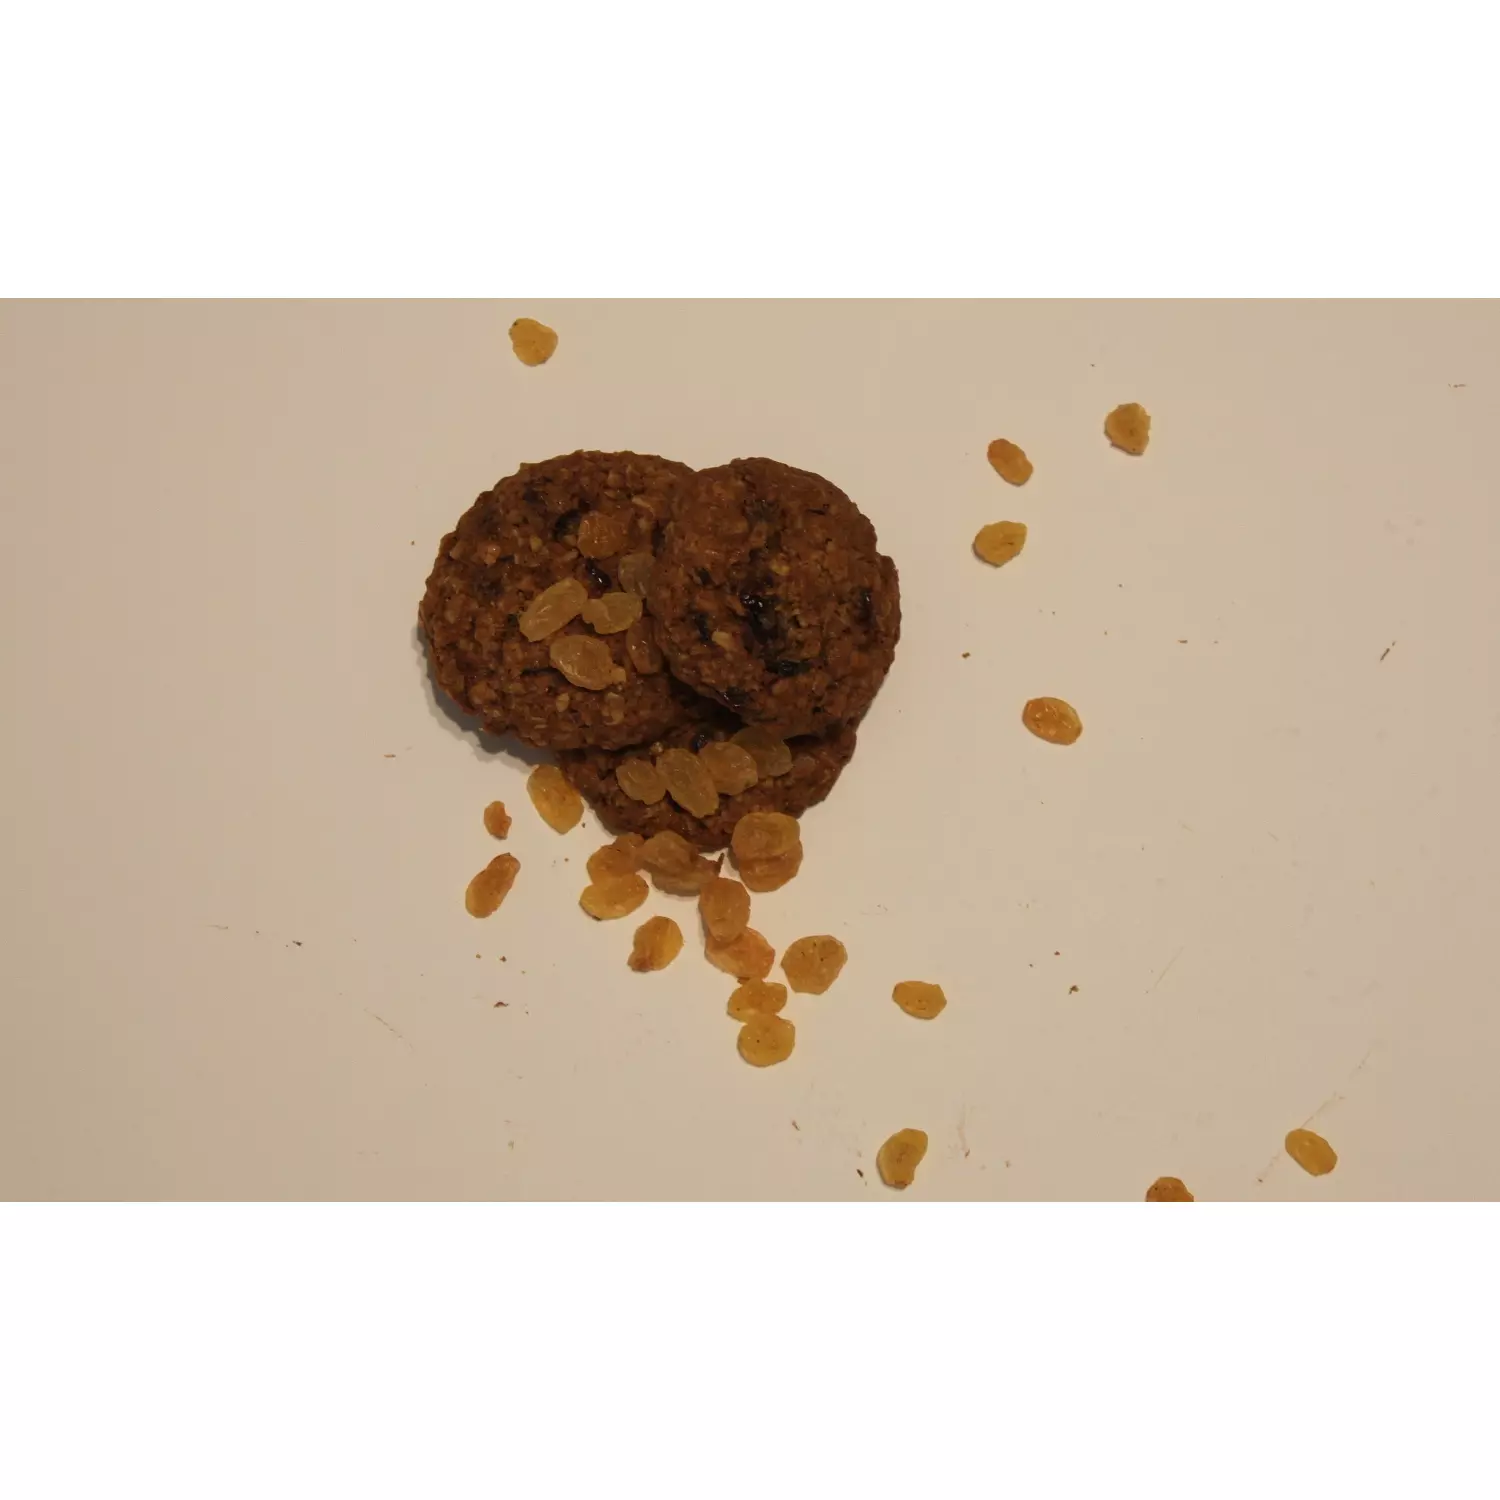 OatmeaL Raisin Cookies hover image